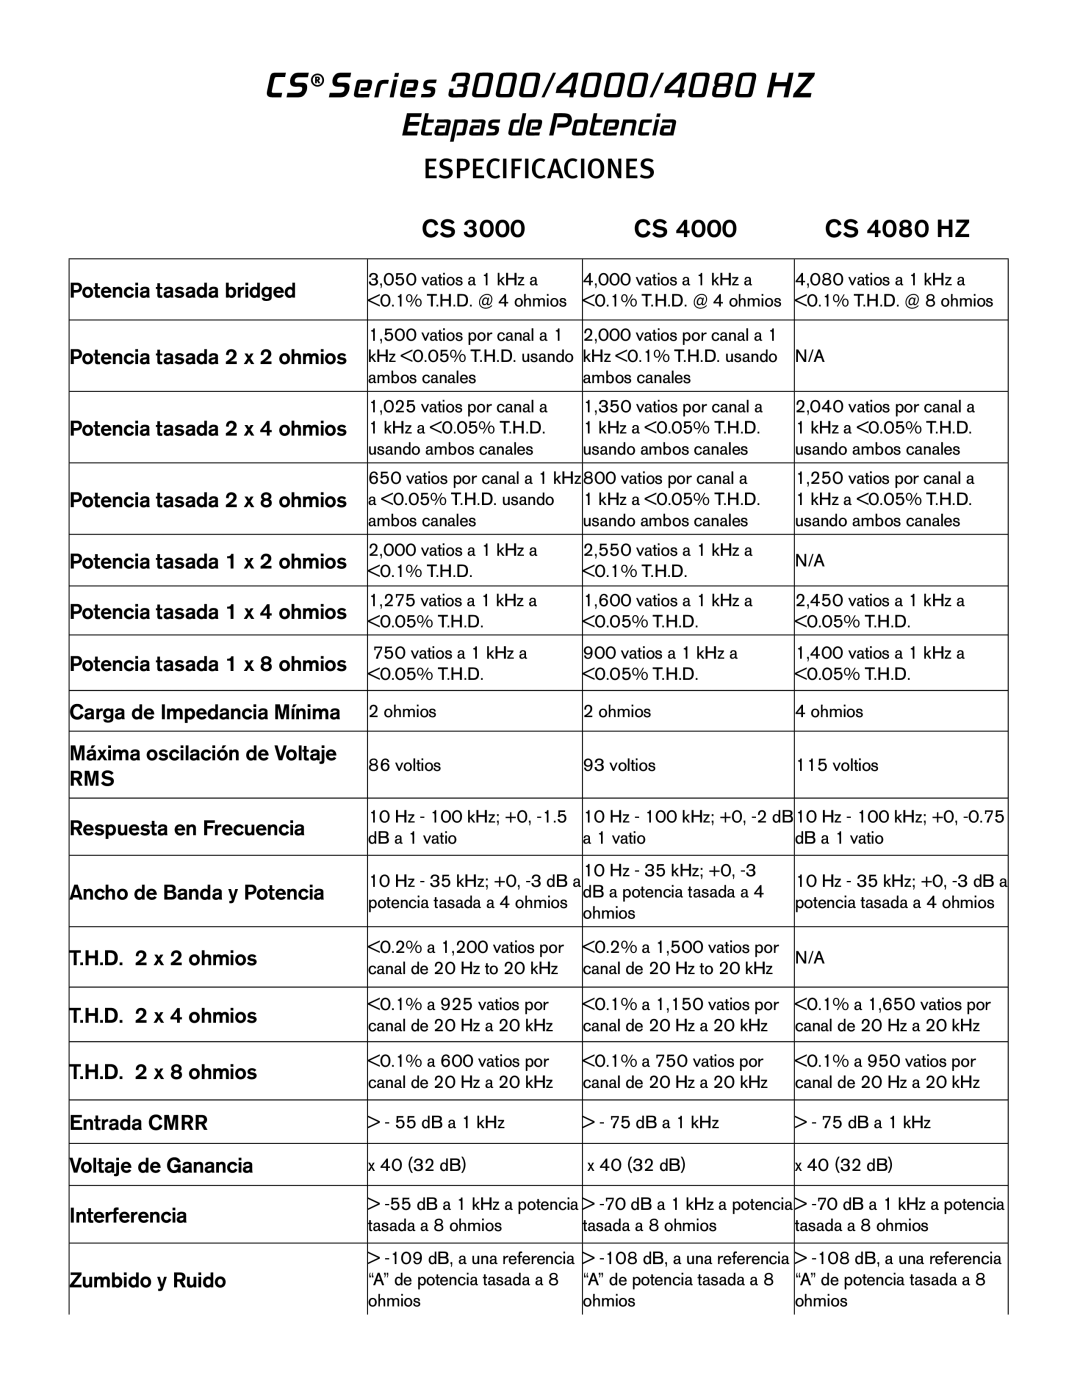 Peavey owner manual Etapas de Potencia, Especificaciones, CS Series 3000/4000/4080 HZ, CS 4080 HZ 